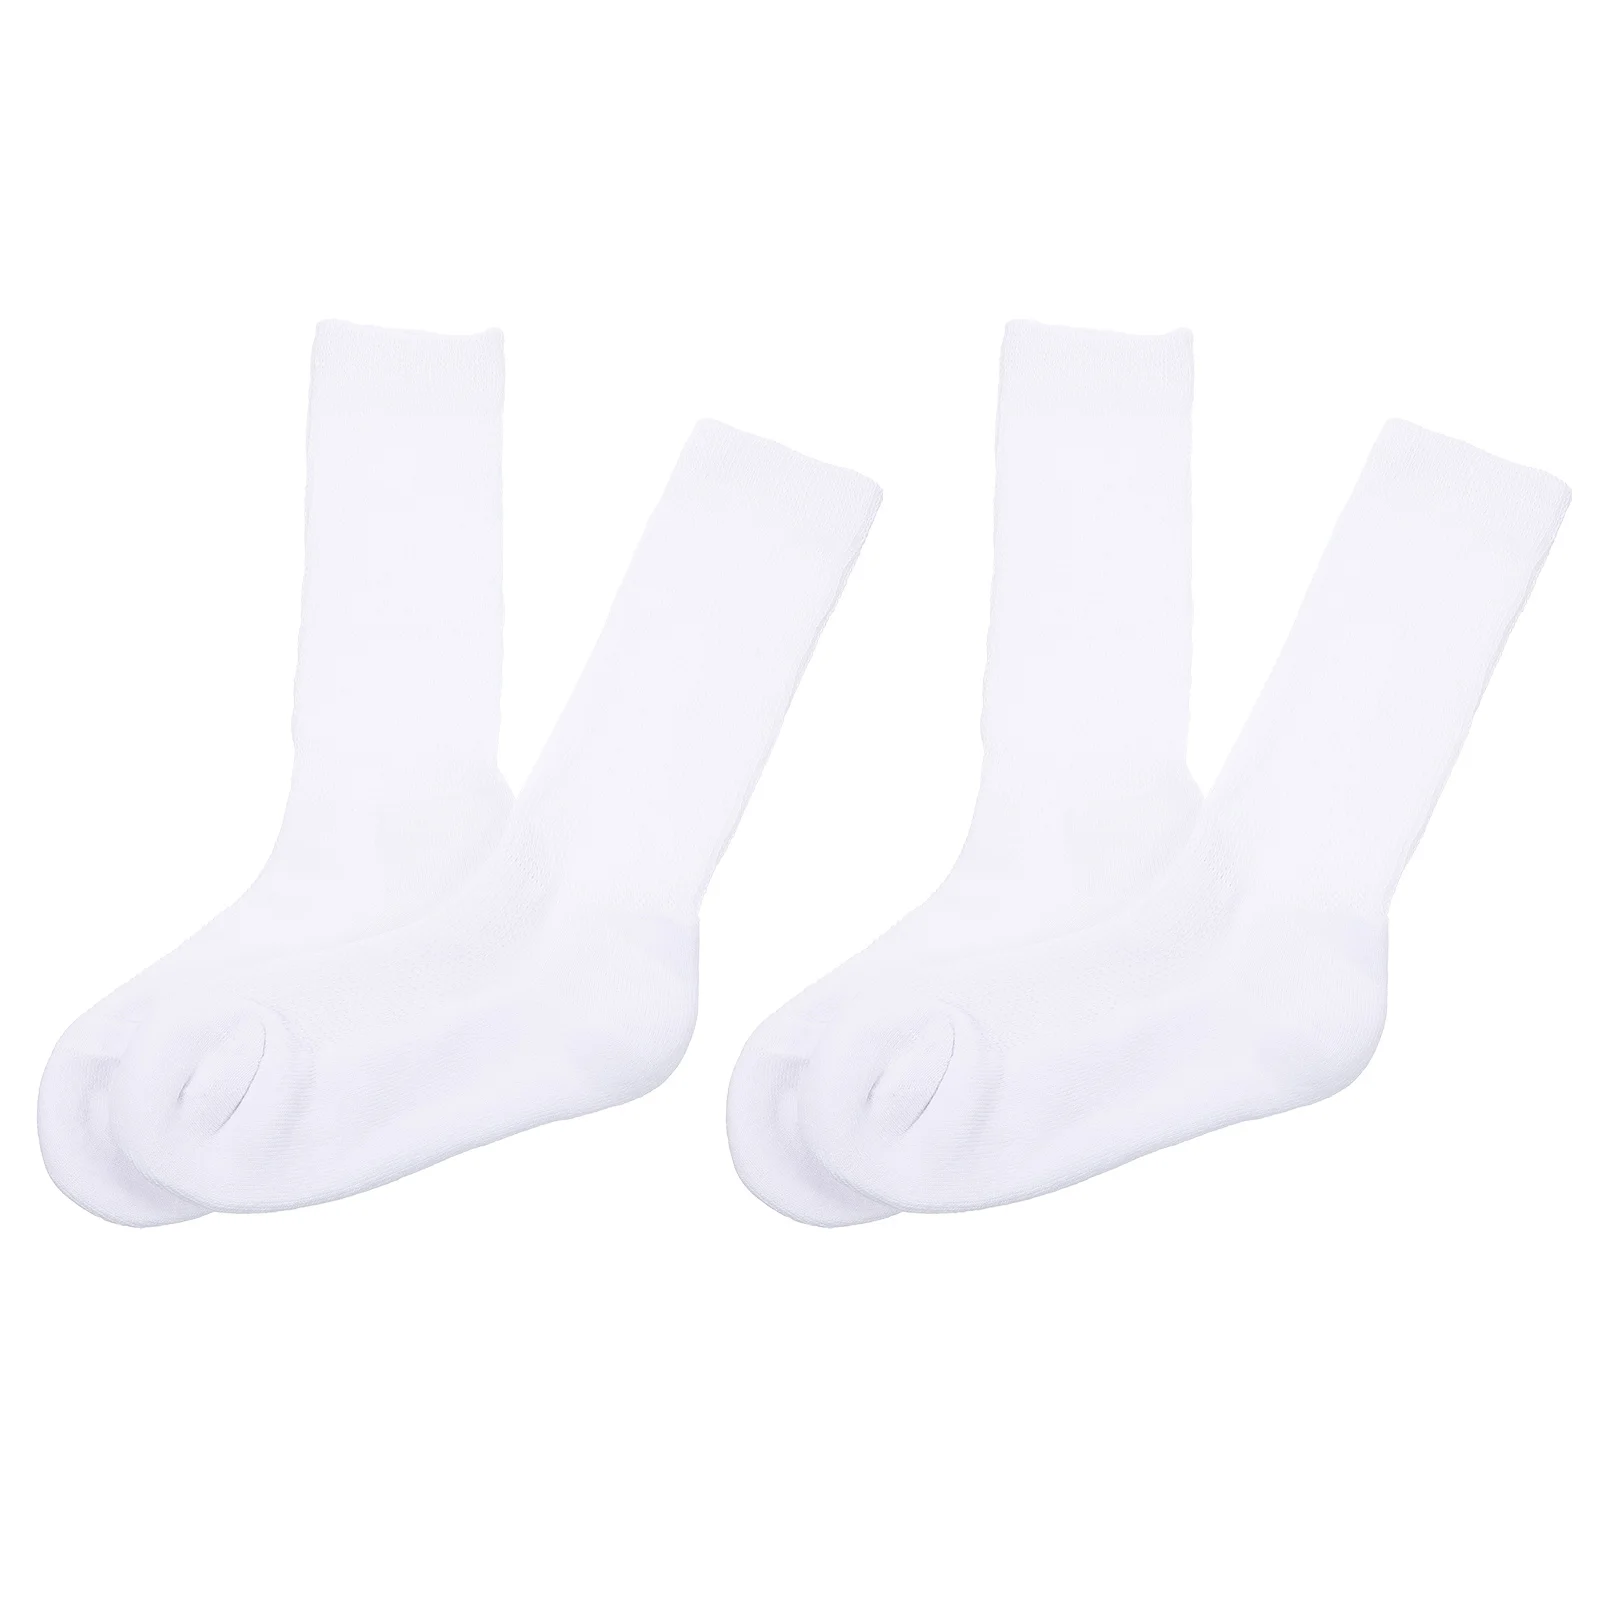 

2 Pairs of Supple Socks Care Socks Elastic Nursing Socks (White)